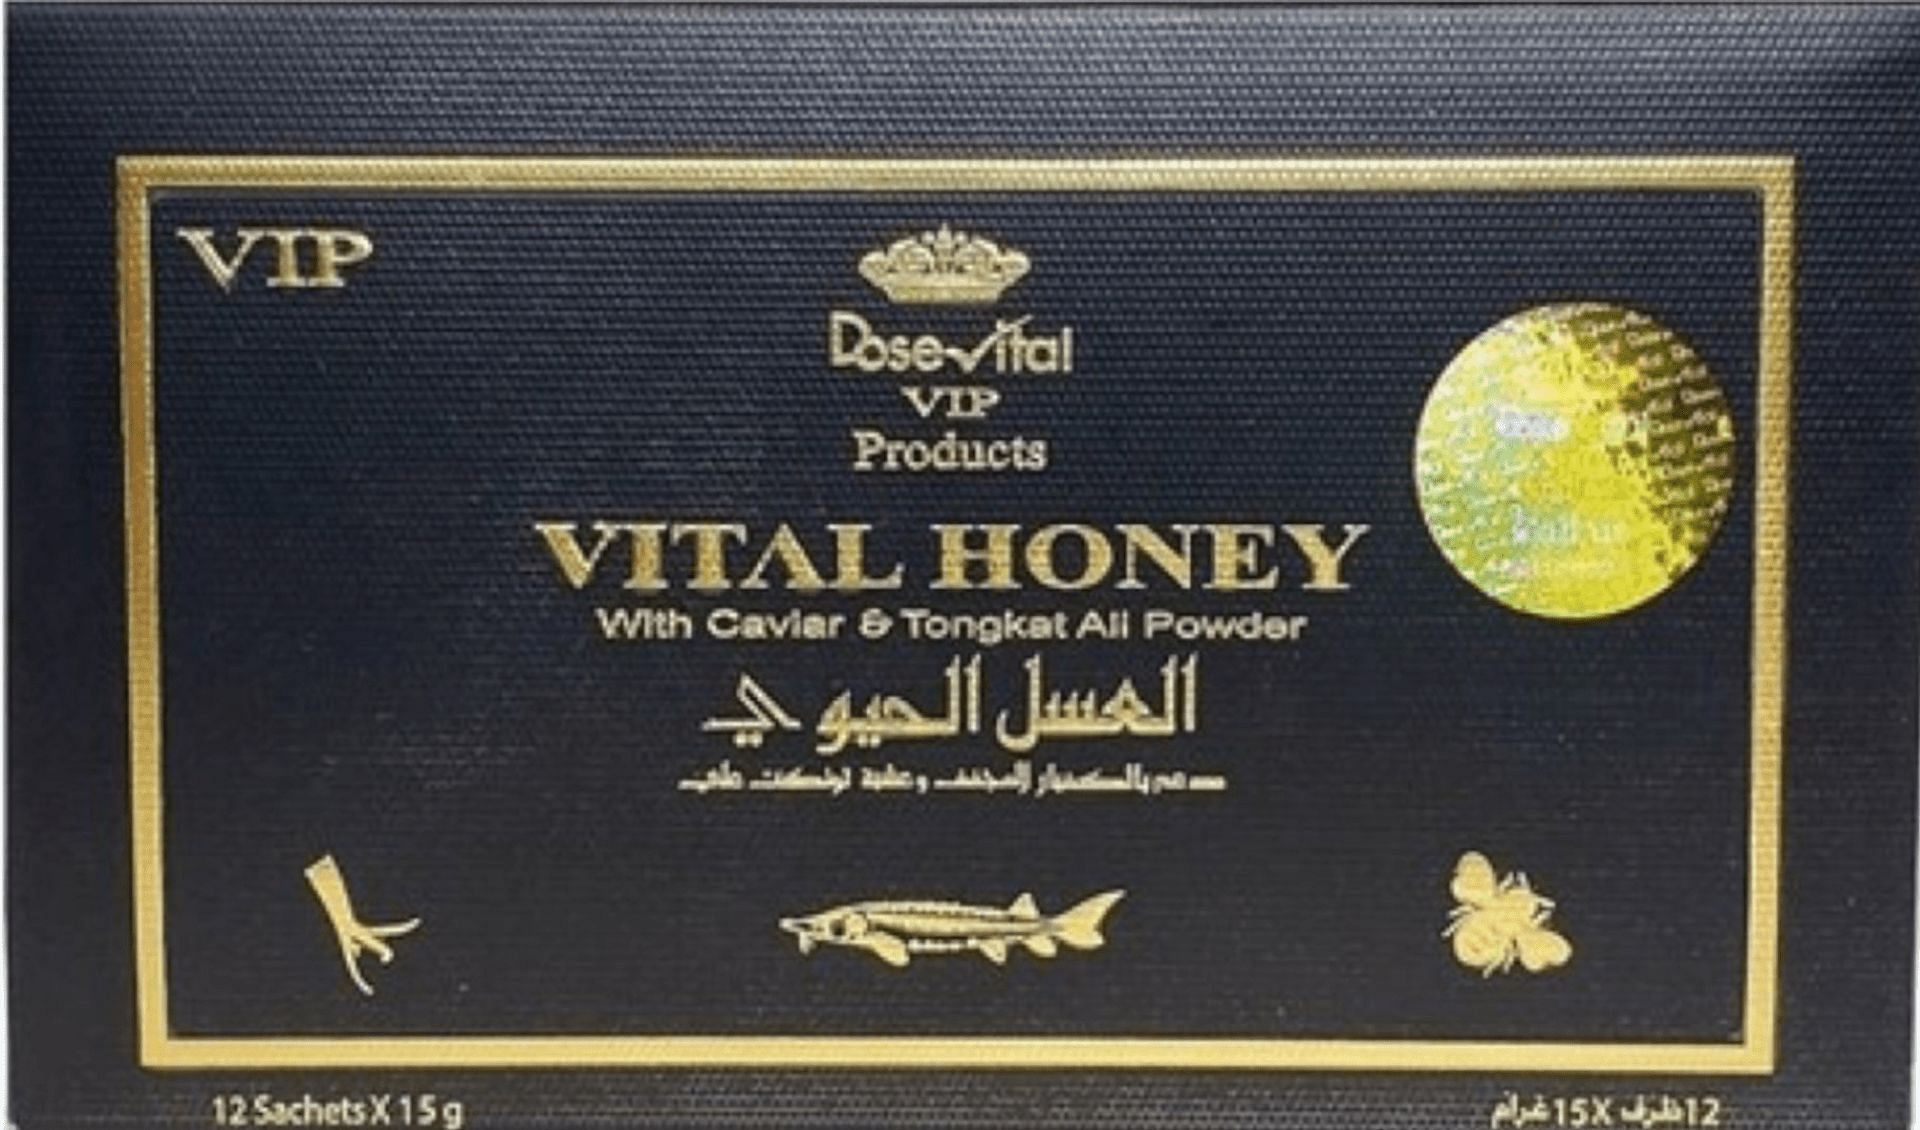 Shopaax.com should stop selling honey products as per FDA notice. (Image via FDA)